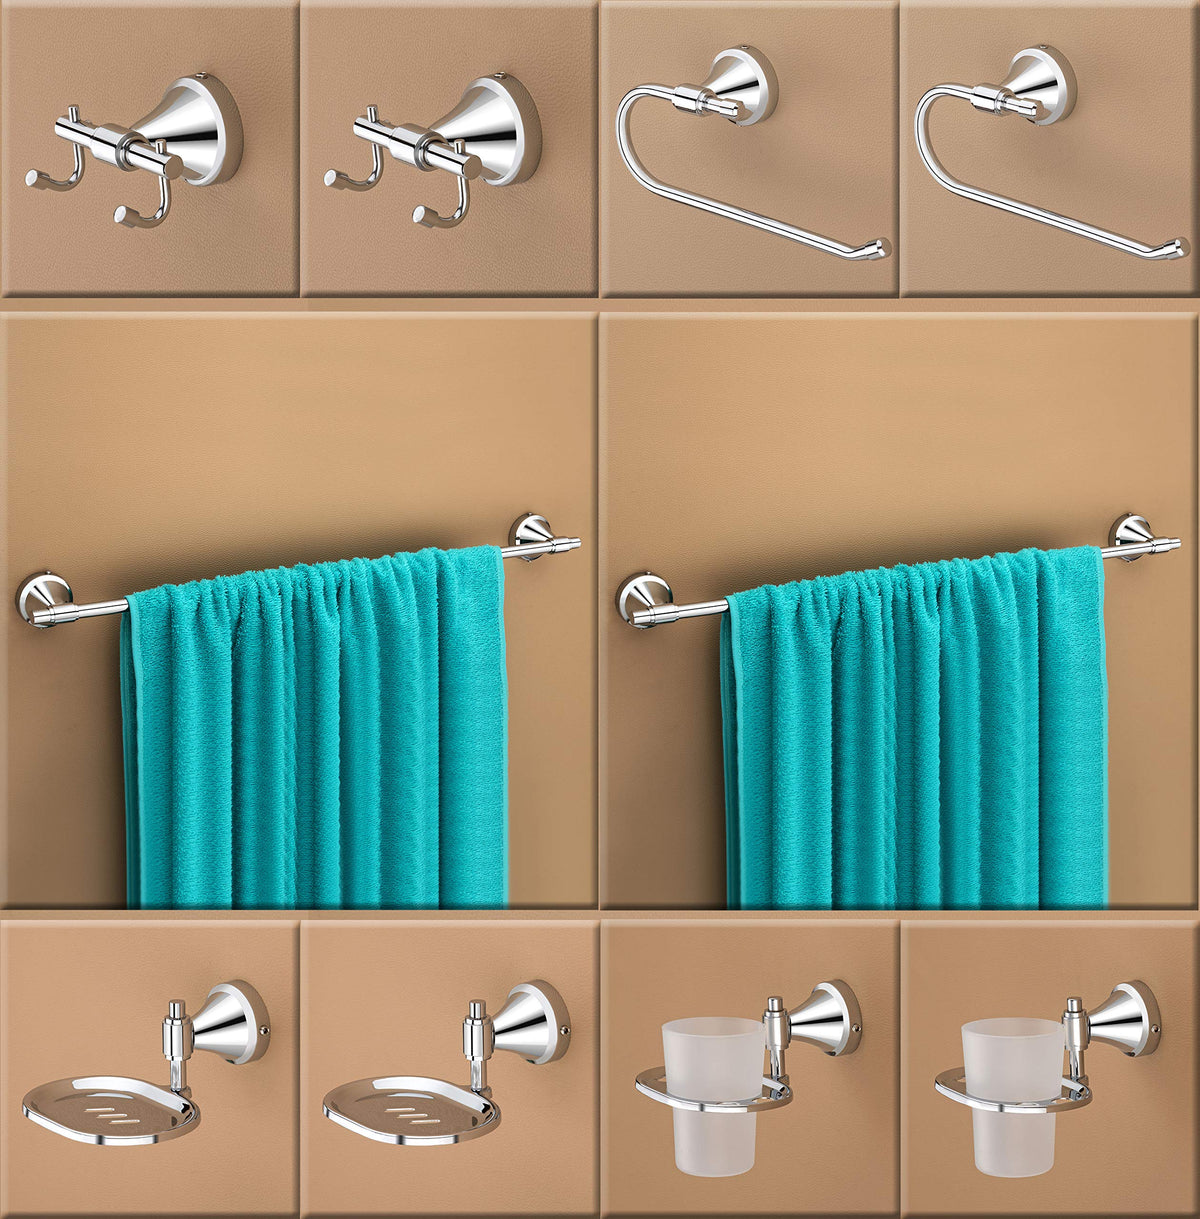 Plantex Stainless Steel 304 Grade Bathroom Accessories Set / Bathroom Hanger for Towel / Towel Bar / Napkin Ring / Tumbler Holder / Soap Dish / Robe Hook (Niko - Pack of 10)